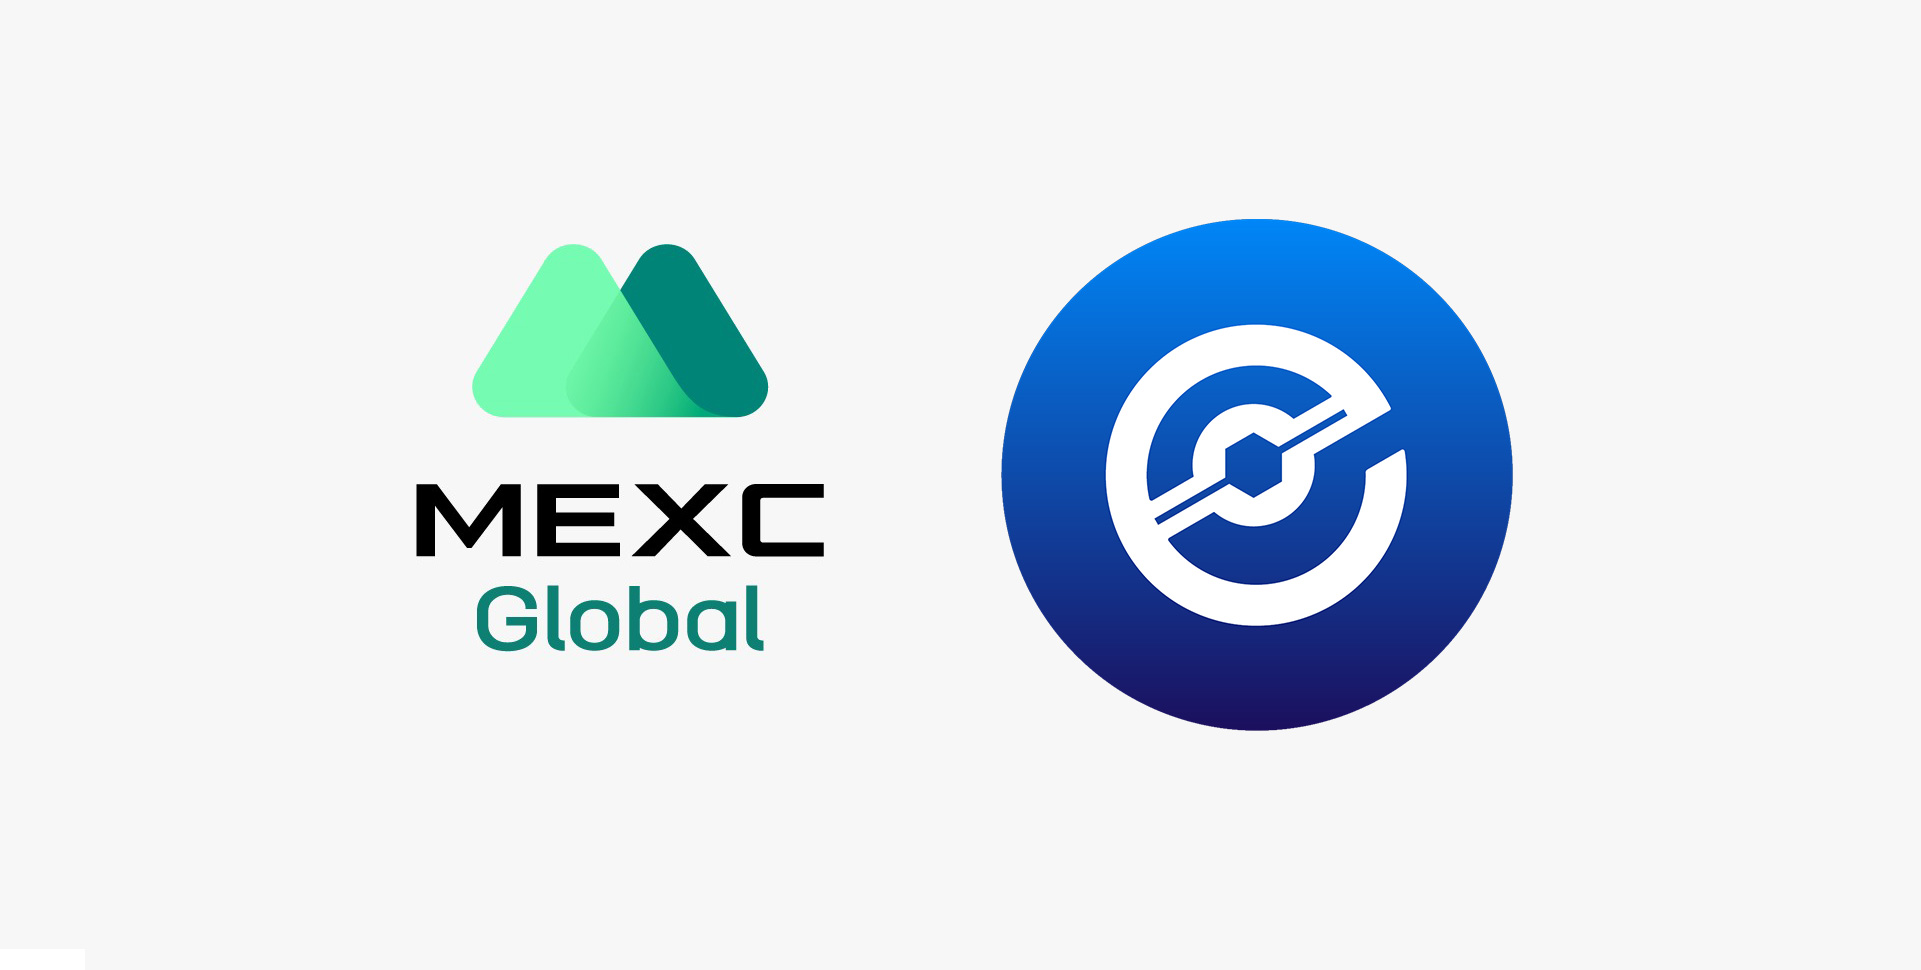 MEXC Global - Electra Protocol - XEP Listing - MEXC XEP - XEP MECX